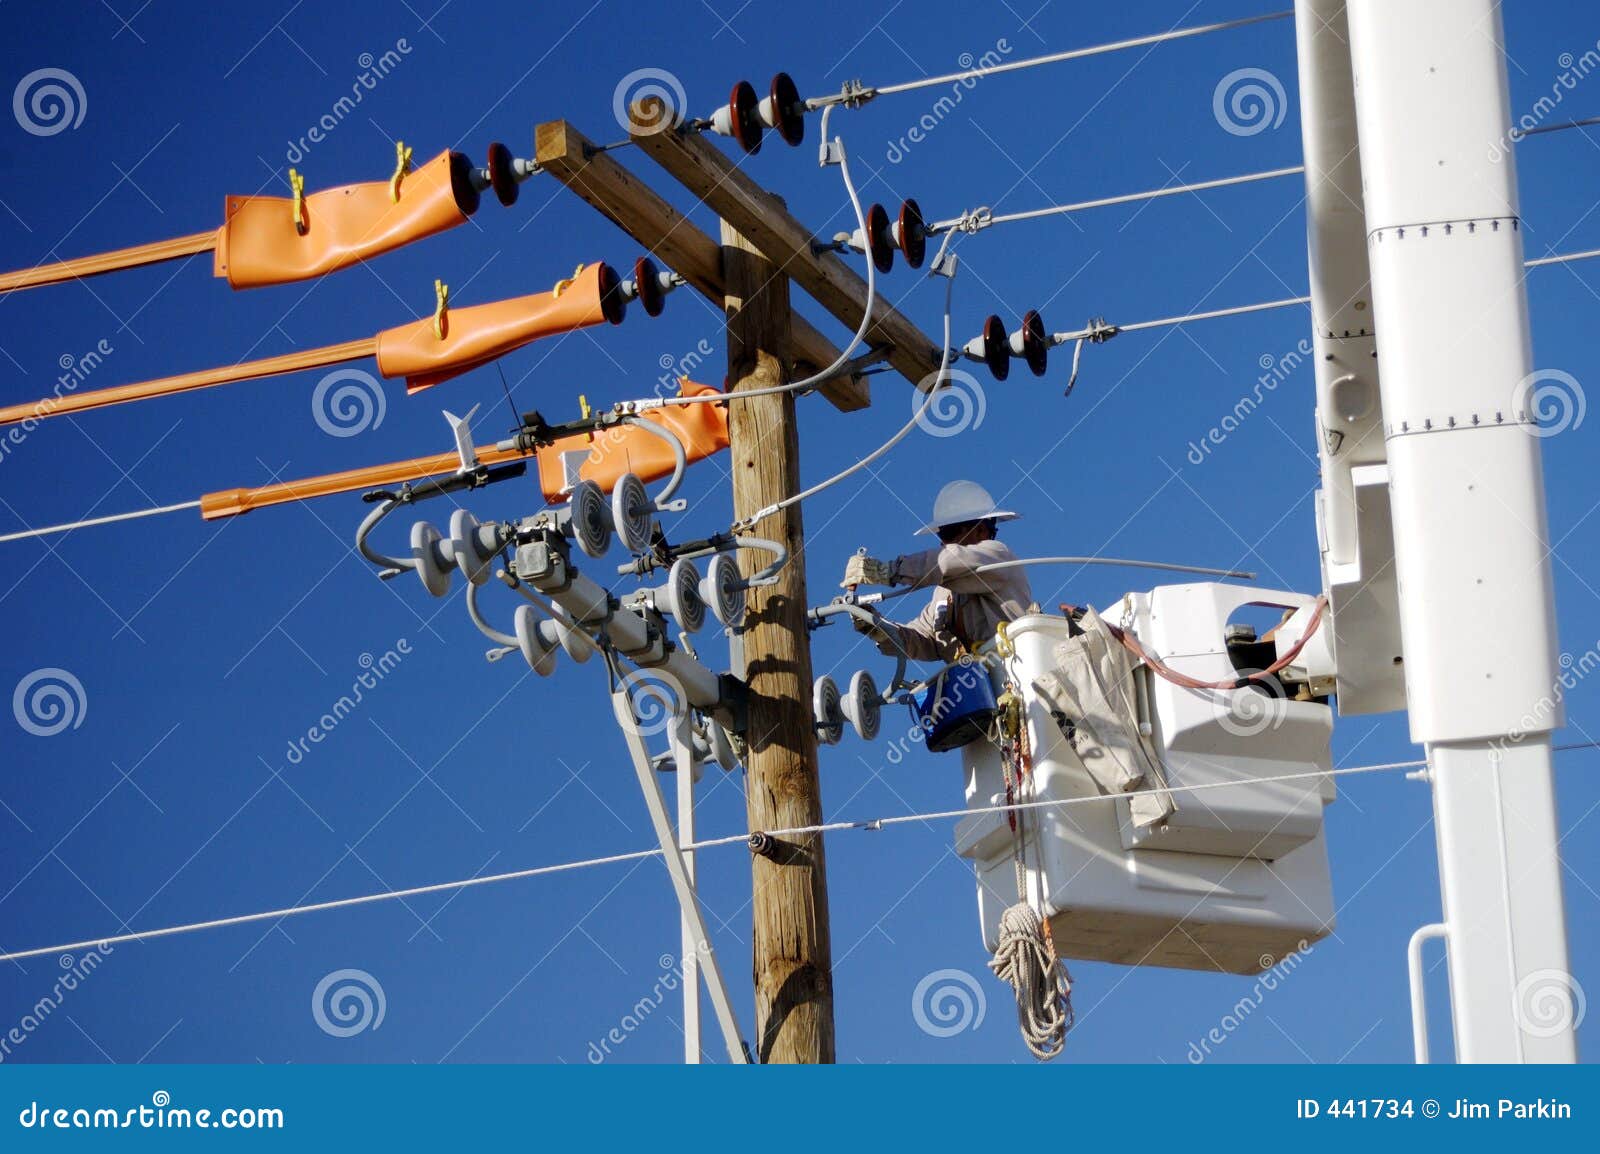 electric utility lineman